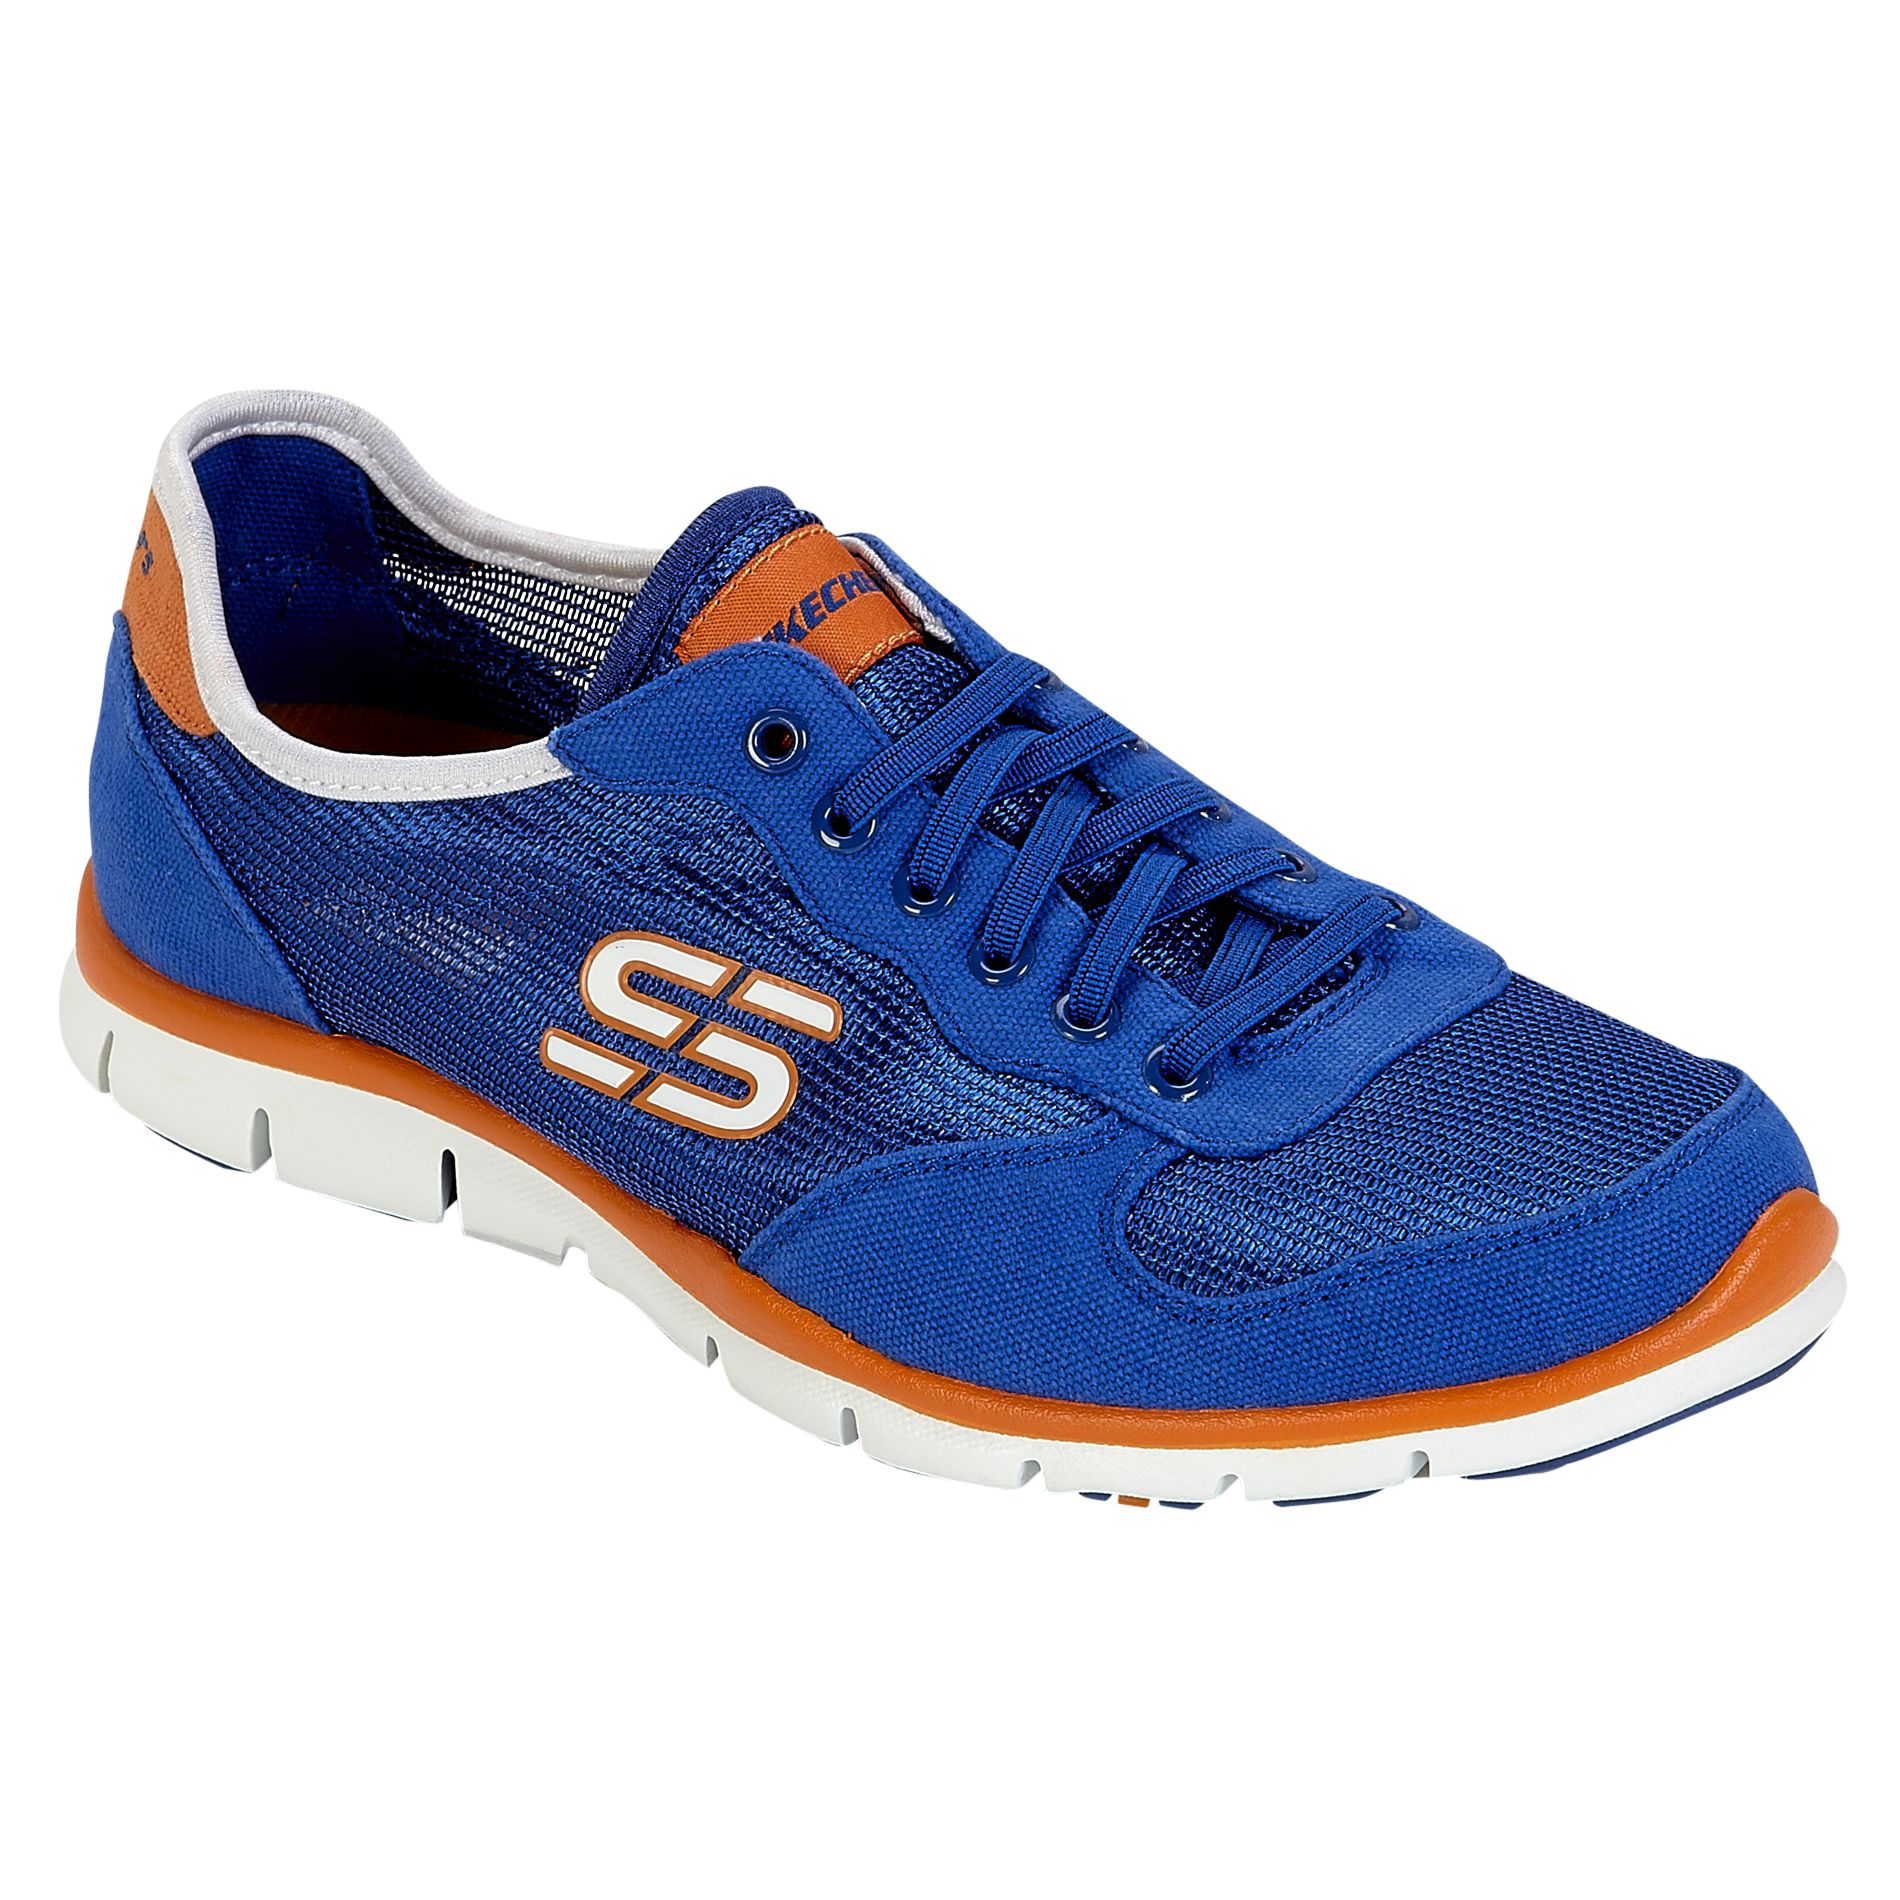 Skechers Women's Athletic Shoe Rock Party  - Royal Blue/Orange